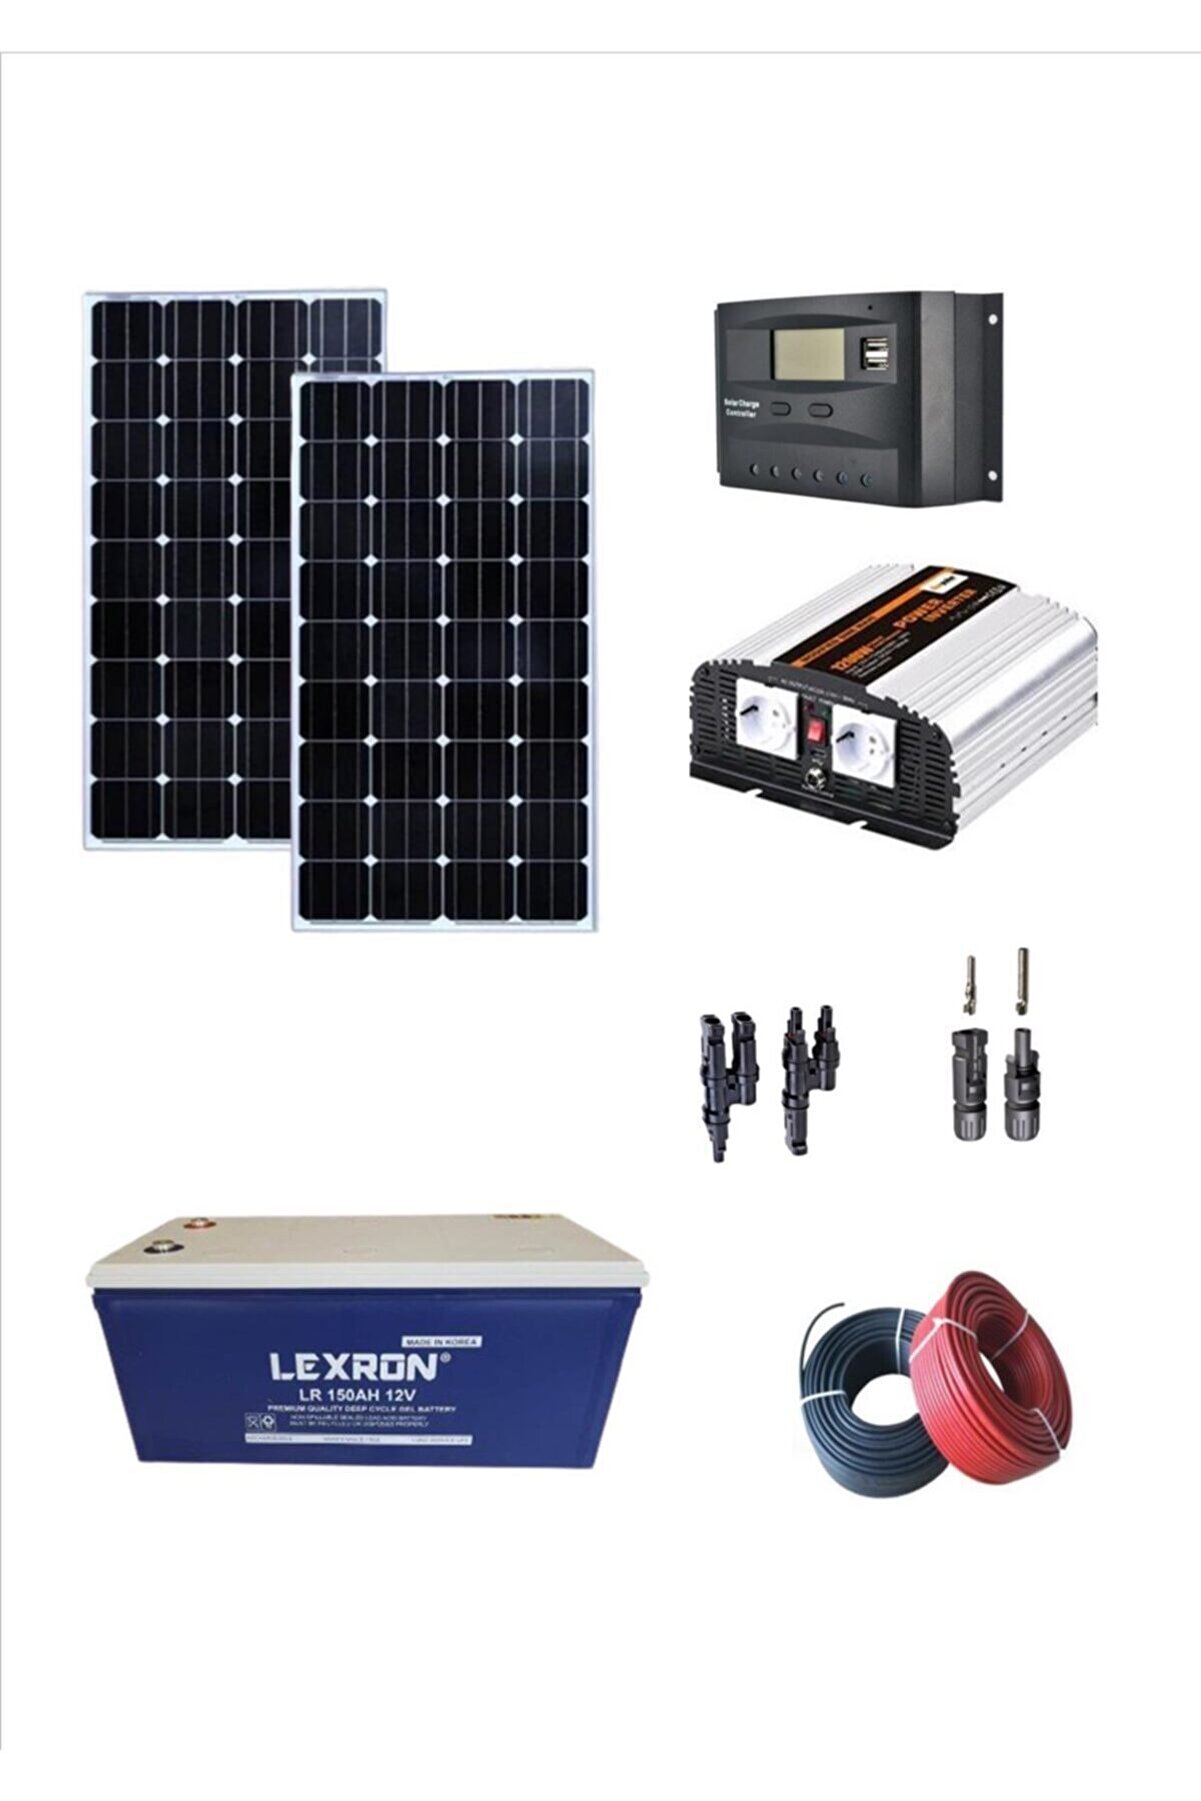 isos enerji Mini Güneş Enerjili Karavan Sistemi 2x205 Watt Monokristal Güneş Panelli